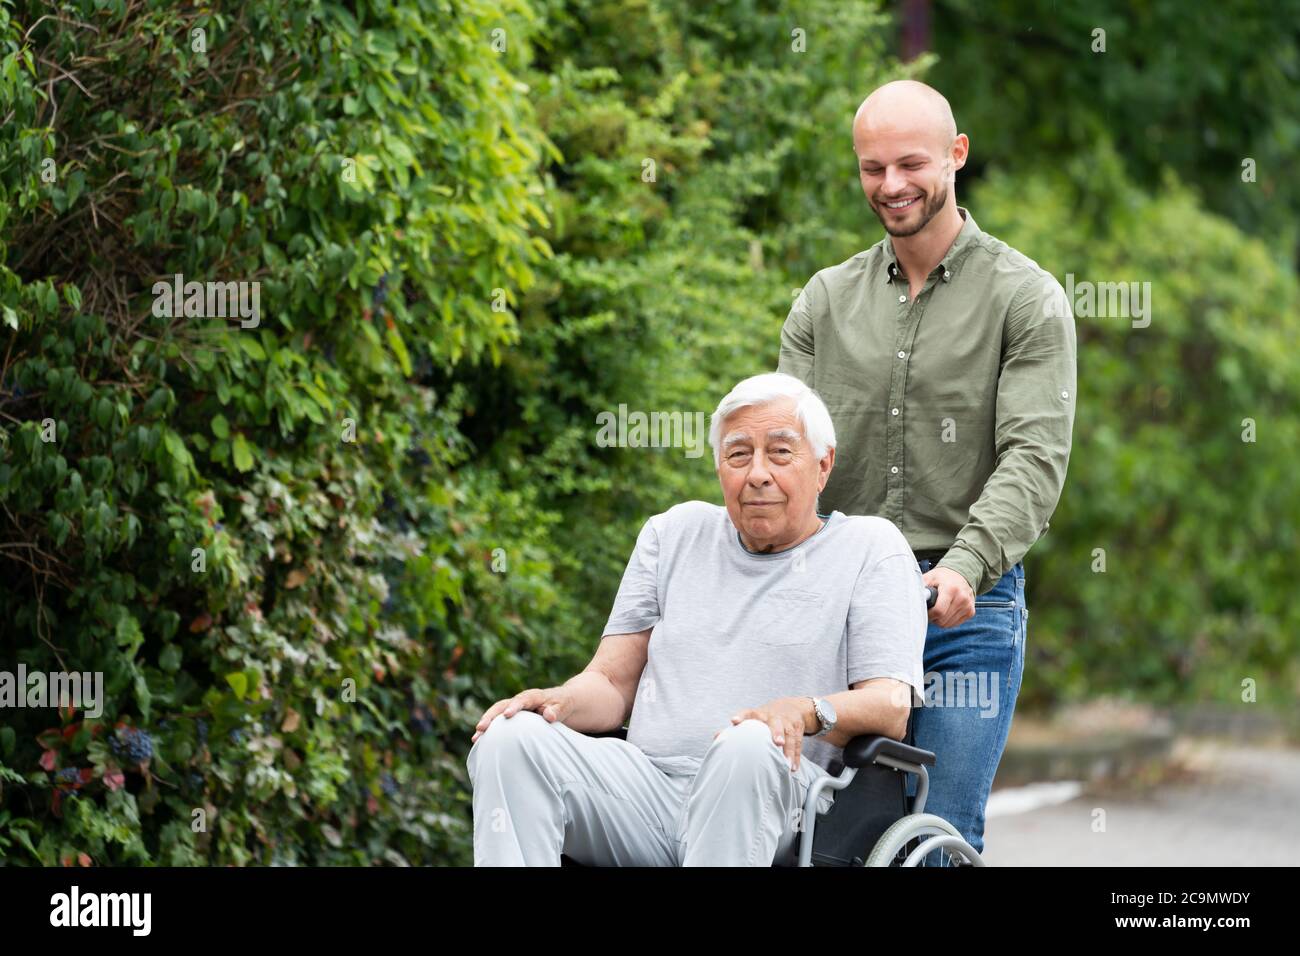 Old Smiling Senior Wheelchair Transport In Park Stock Photo